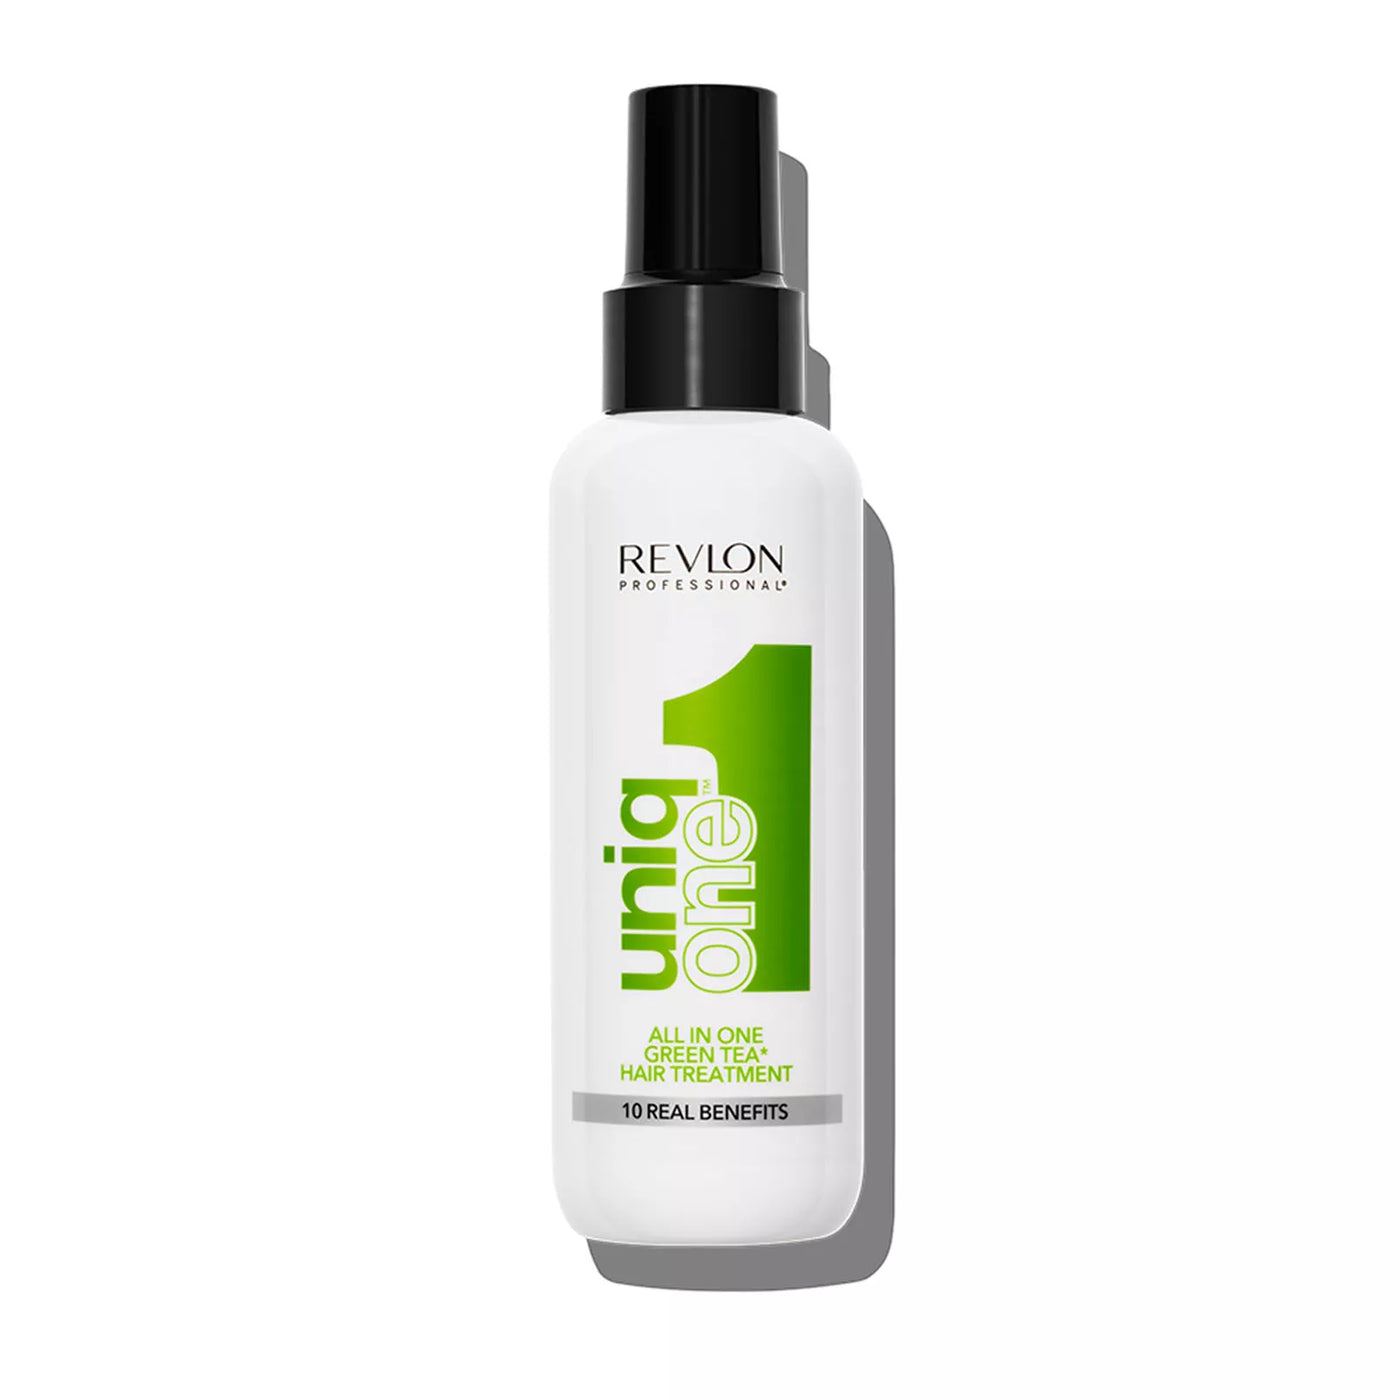 Uniqone™ Hair Treatment Green Tea Fragrance